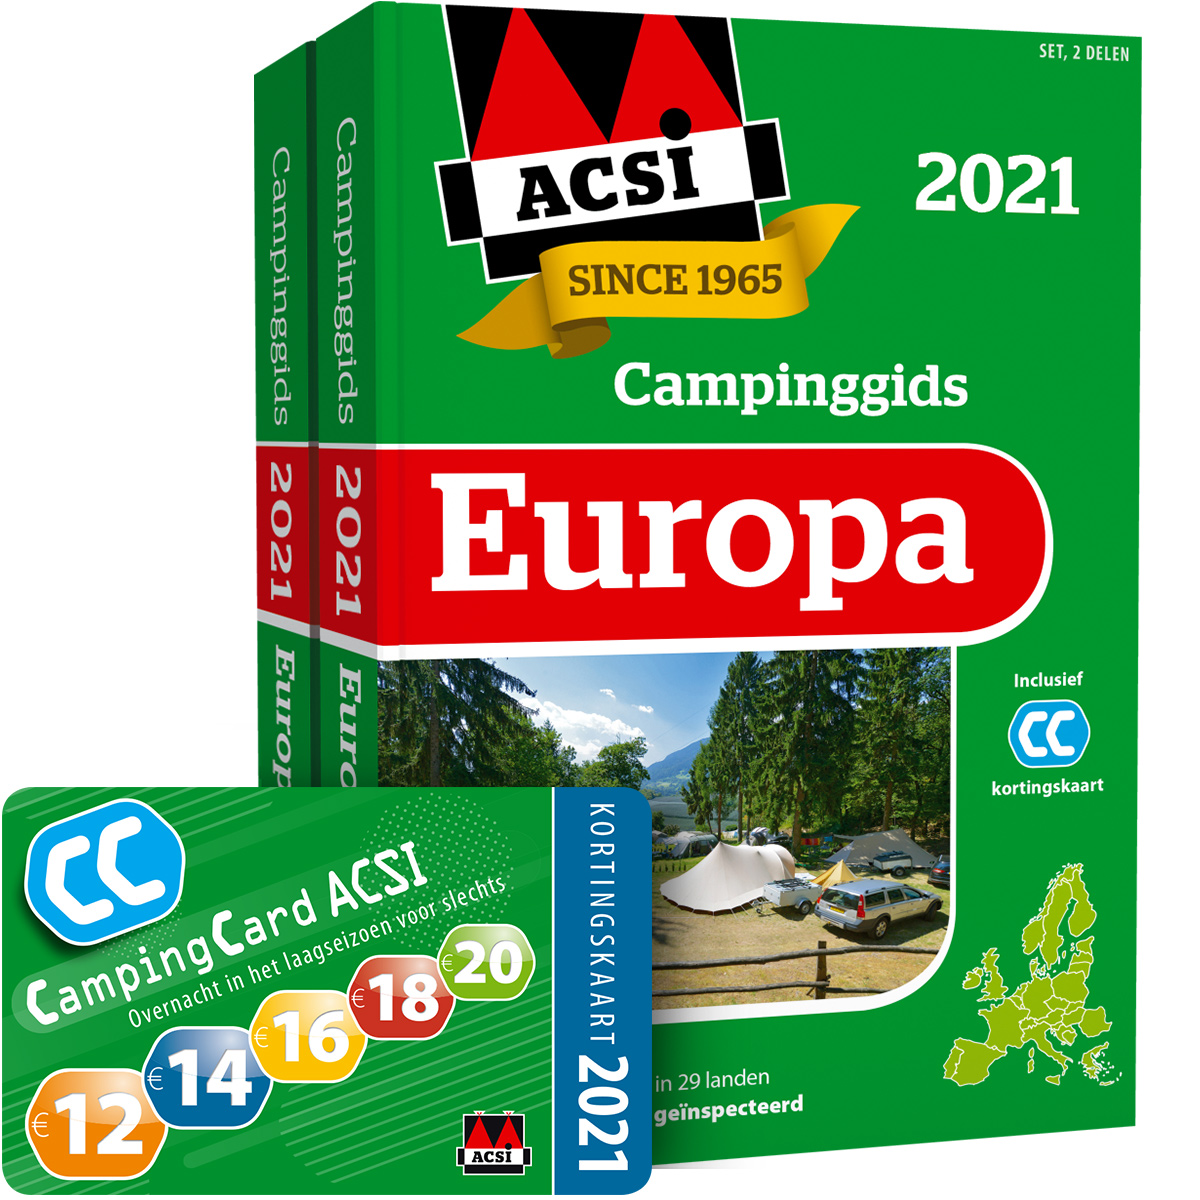 ACSI Campinggids Europa